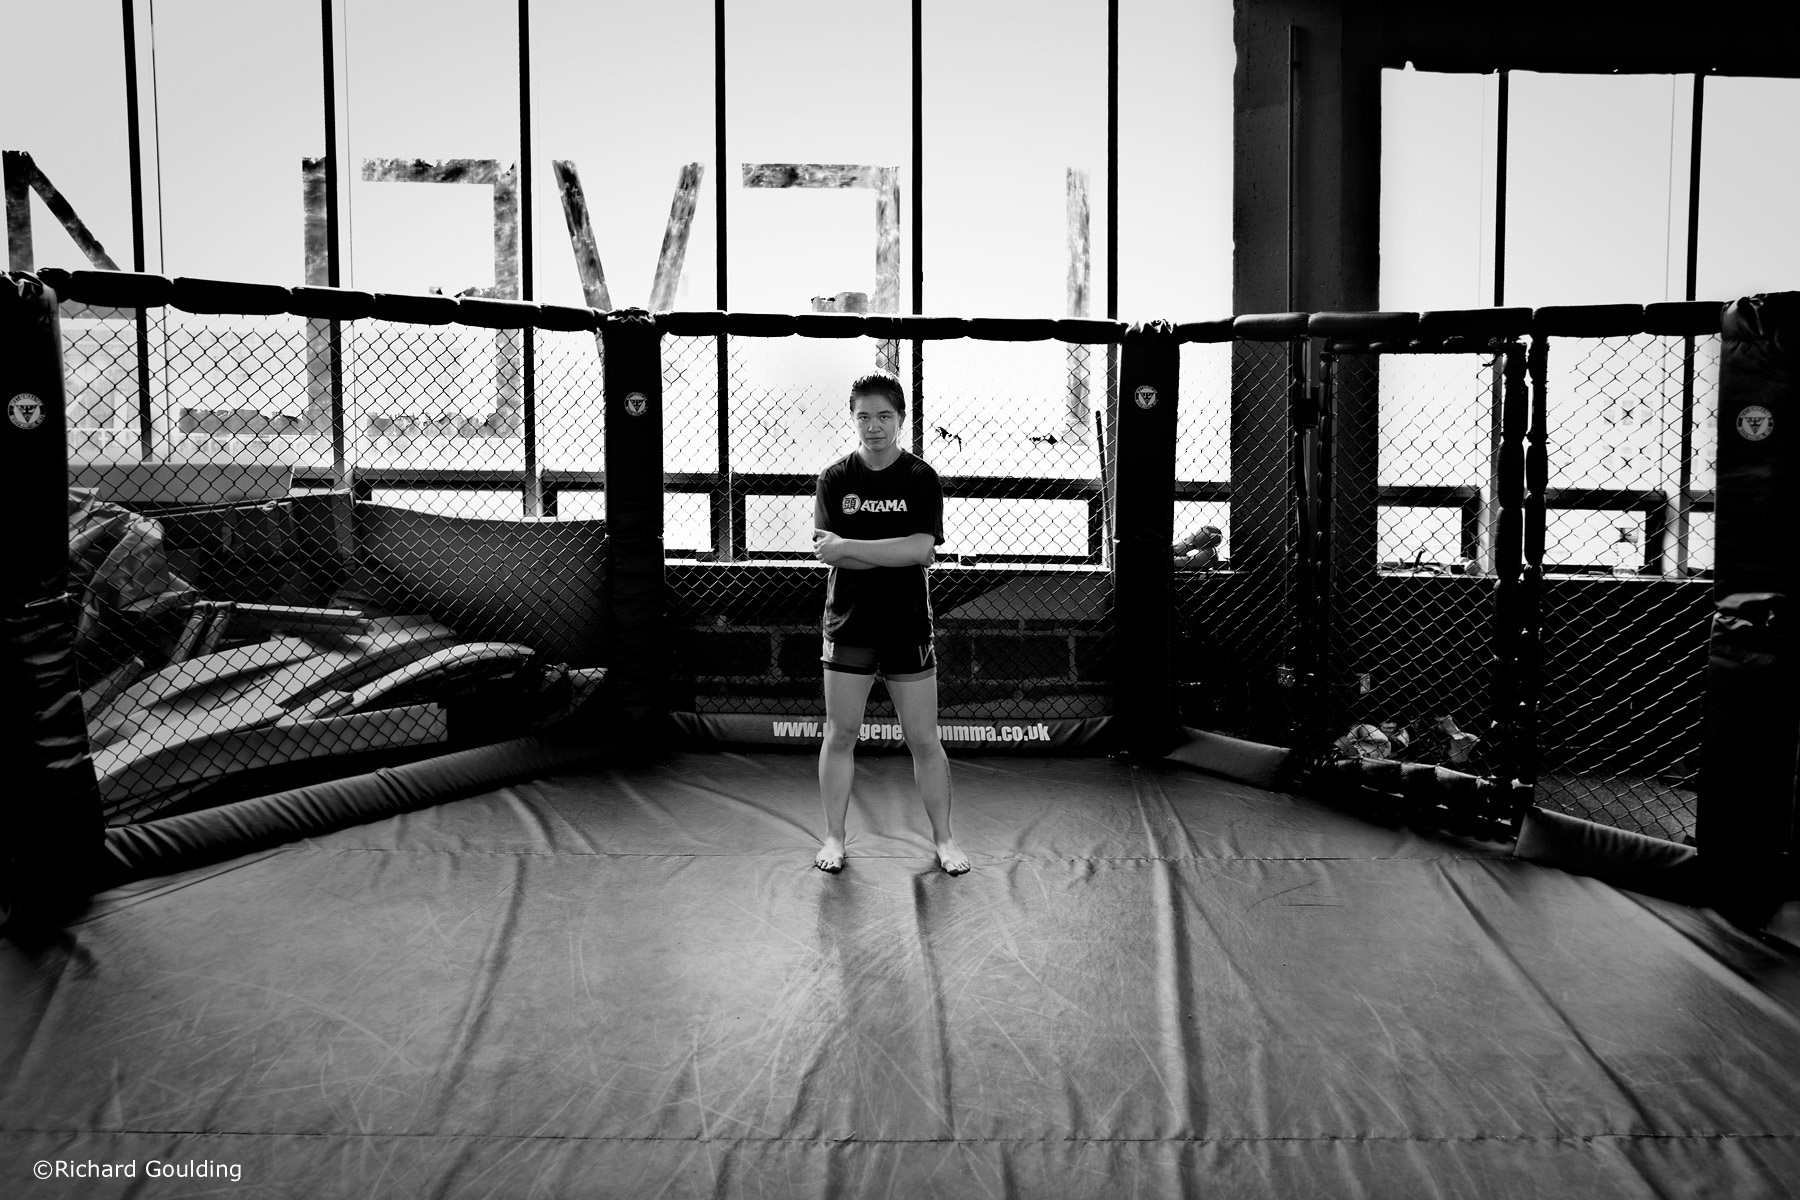  Rosi Sexton UFC MMA fighter; Liverpool 2013; ©Richard Goulding 